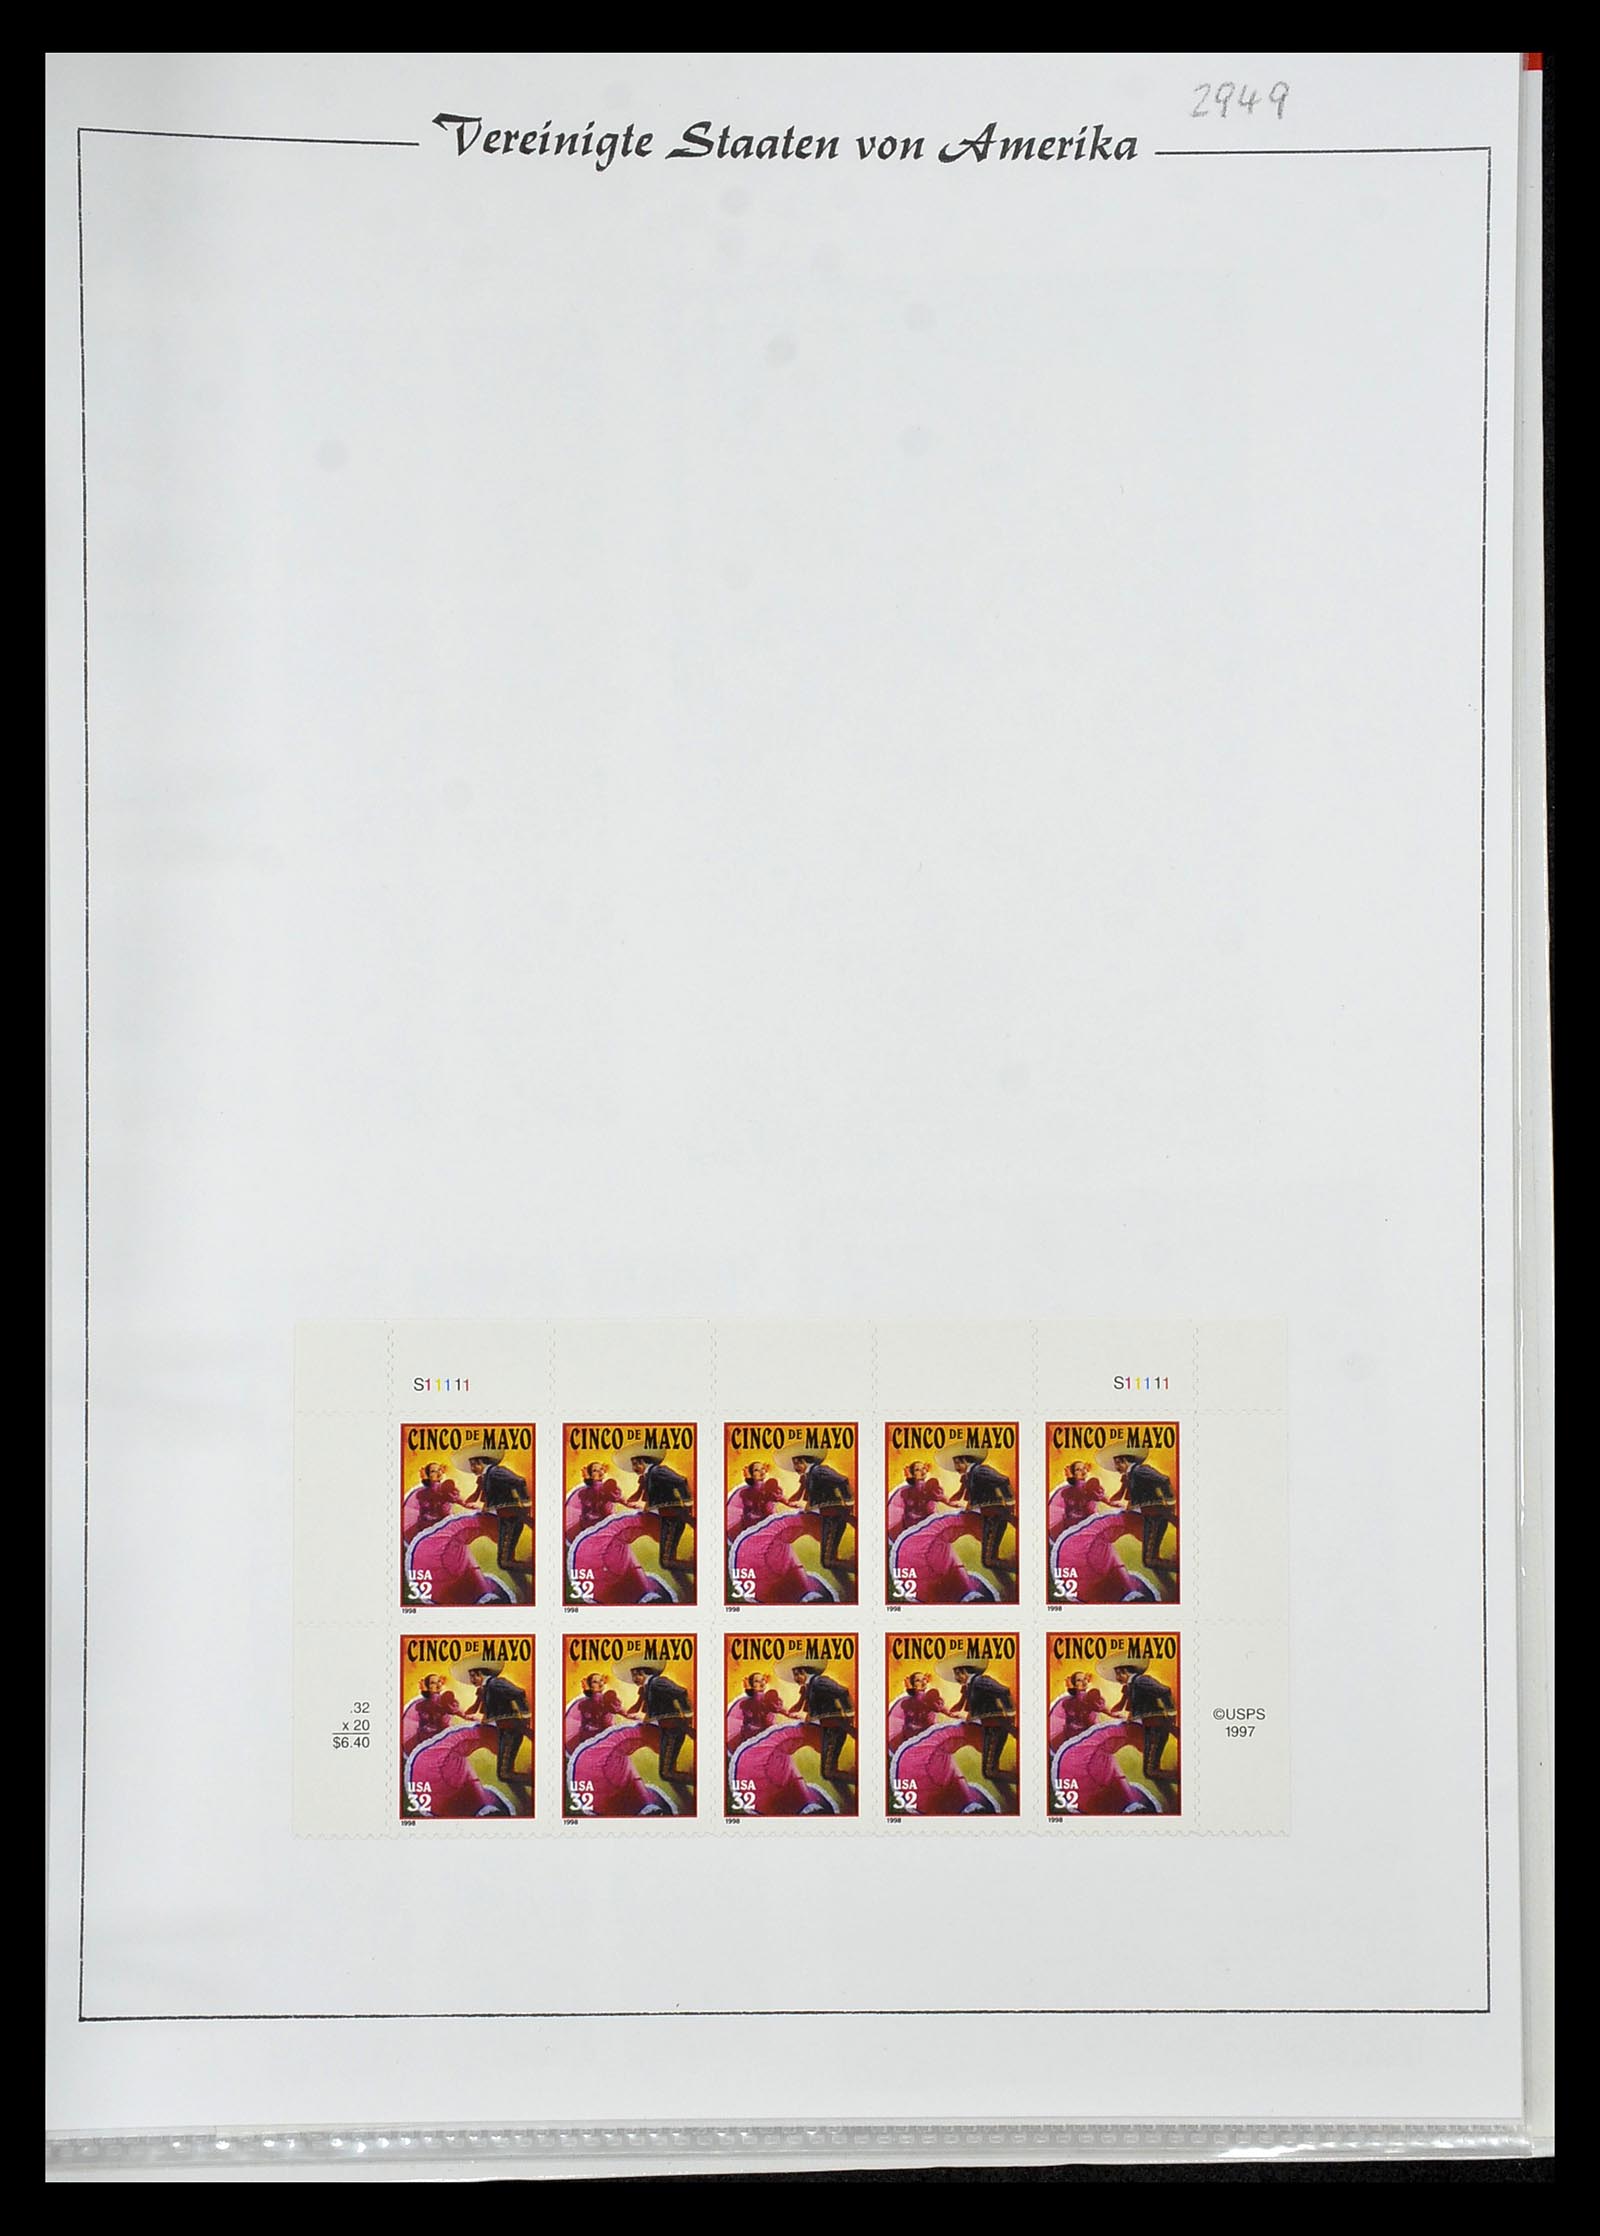 34834 094 - Stamp Collection 34834 USA sheetlets 1988-2005.